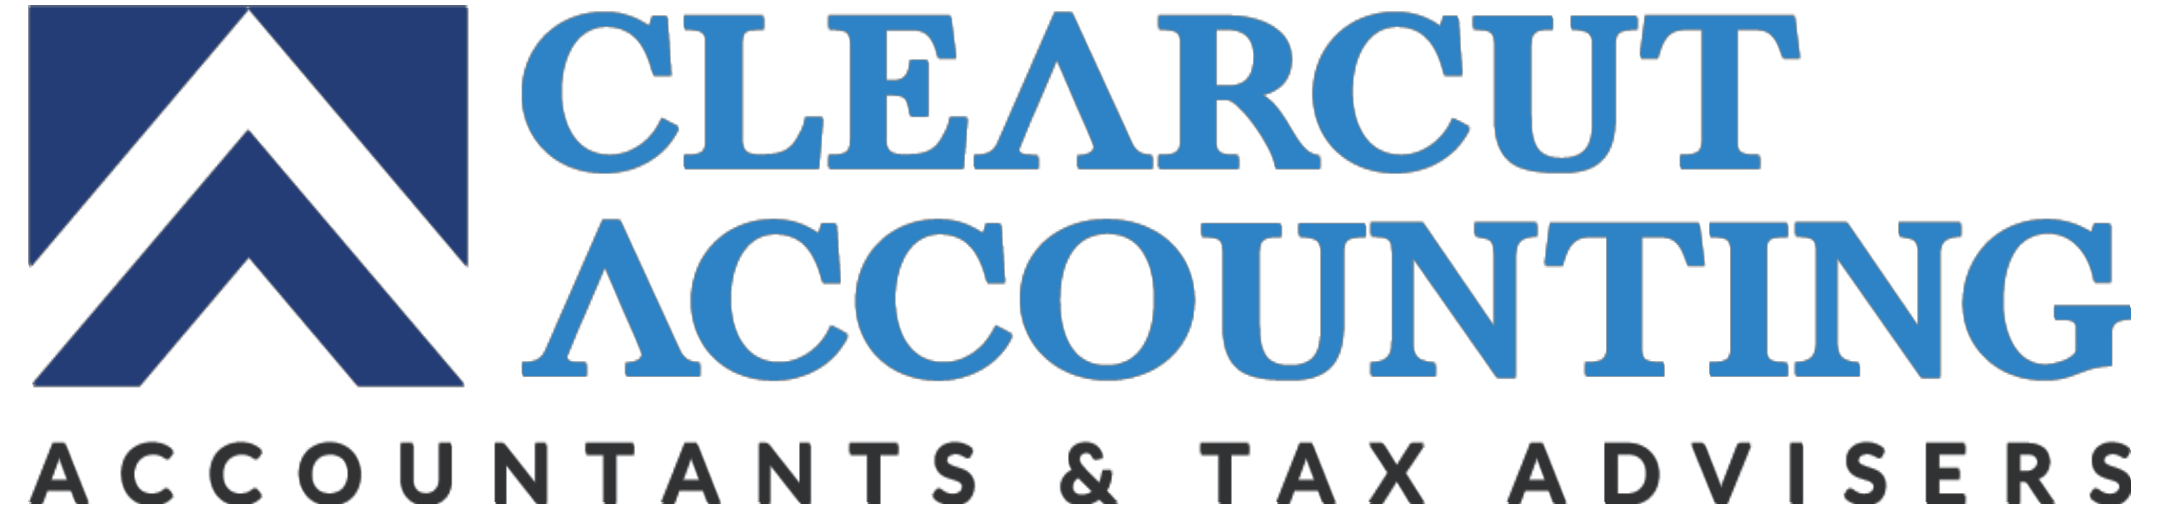 Clearcut Accounting Logo